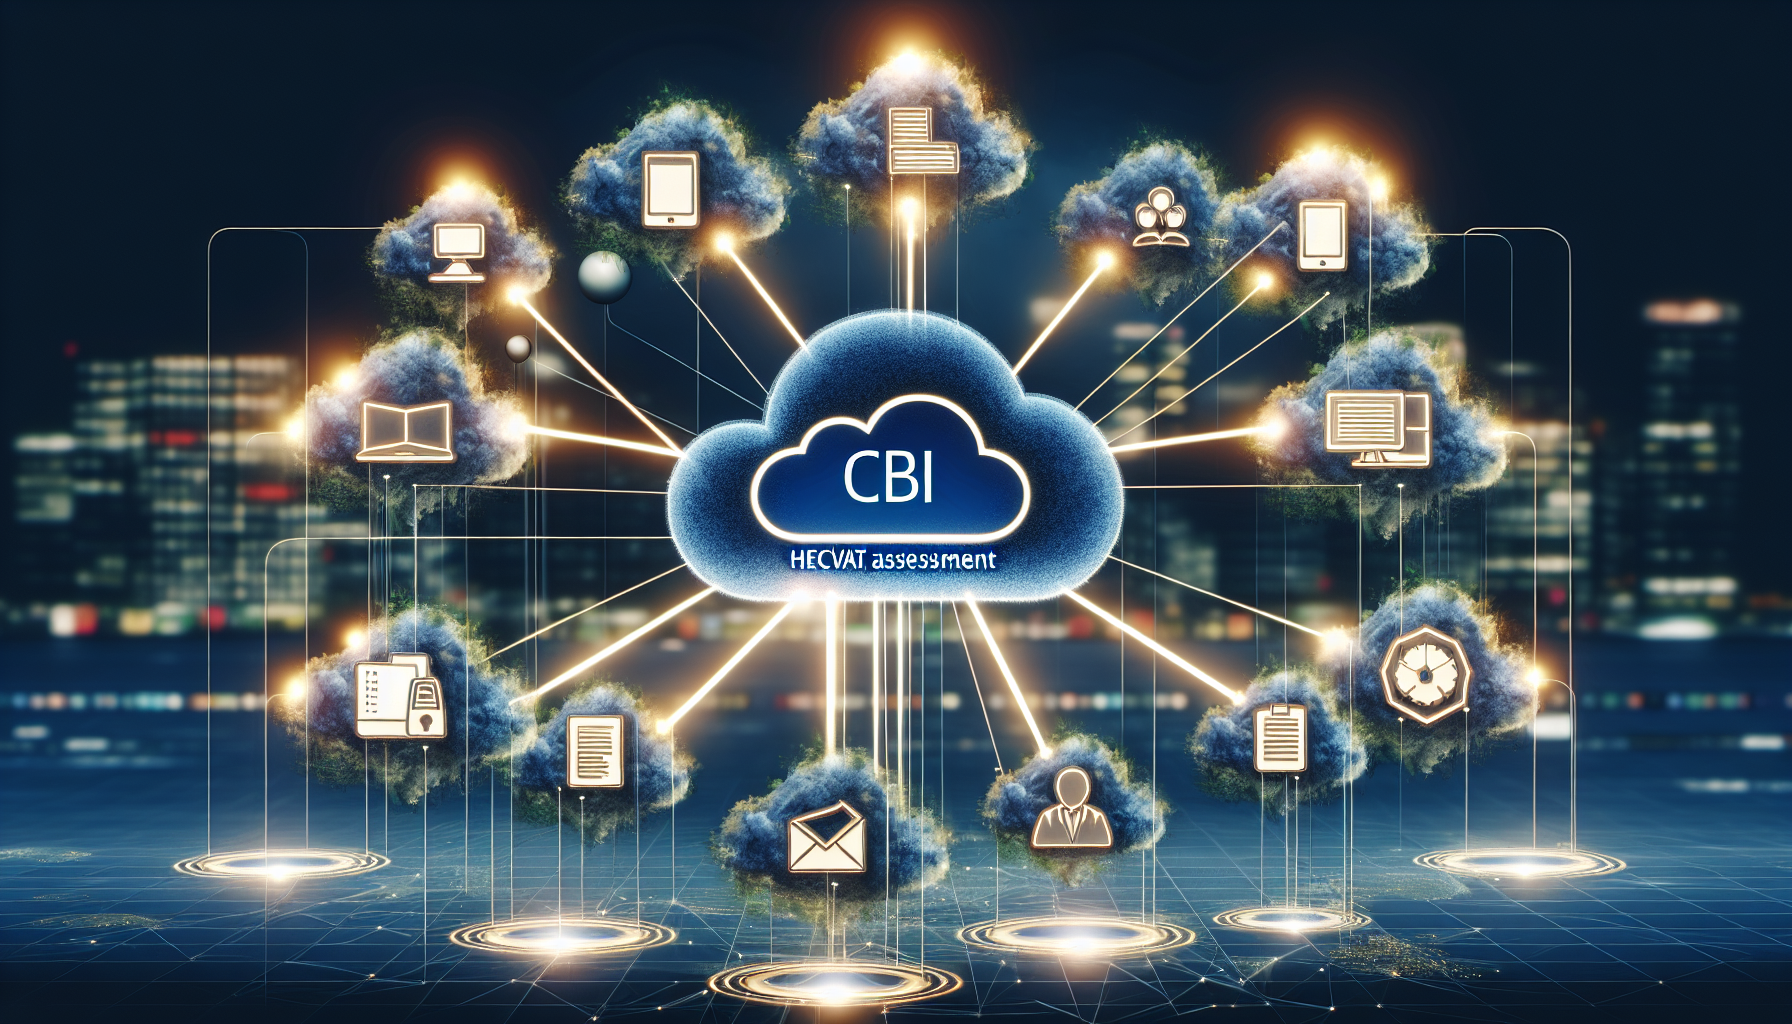 Cloud Broker Index (CBI) Connection